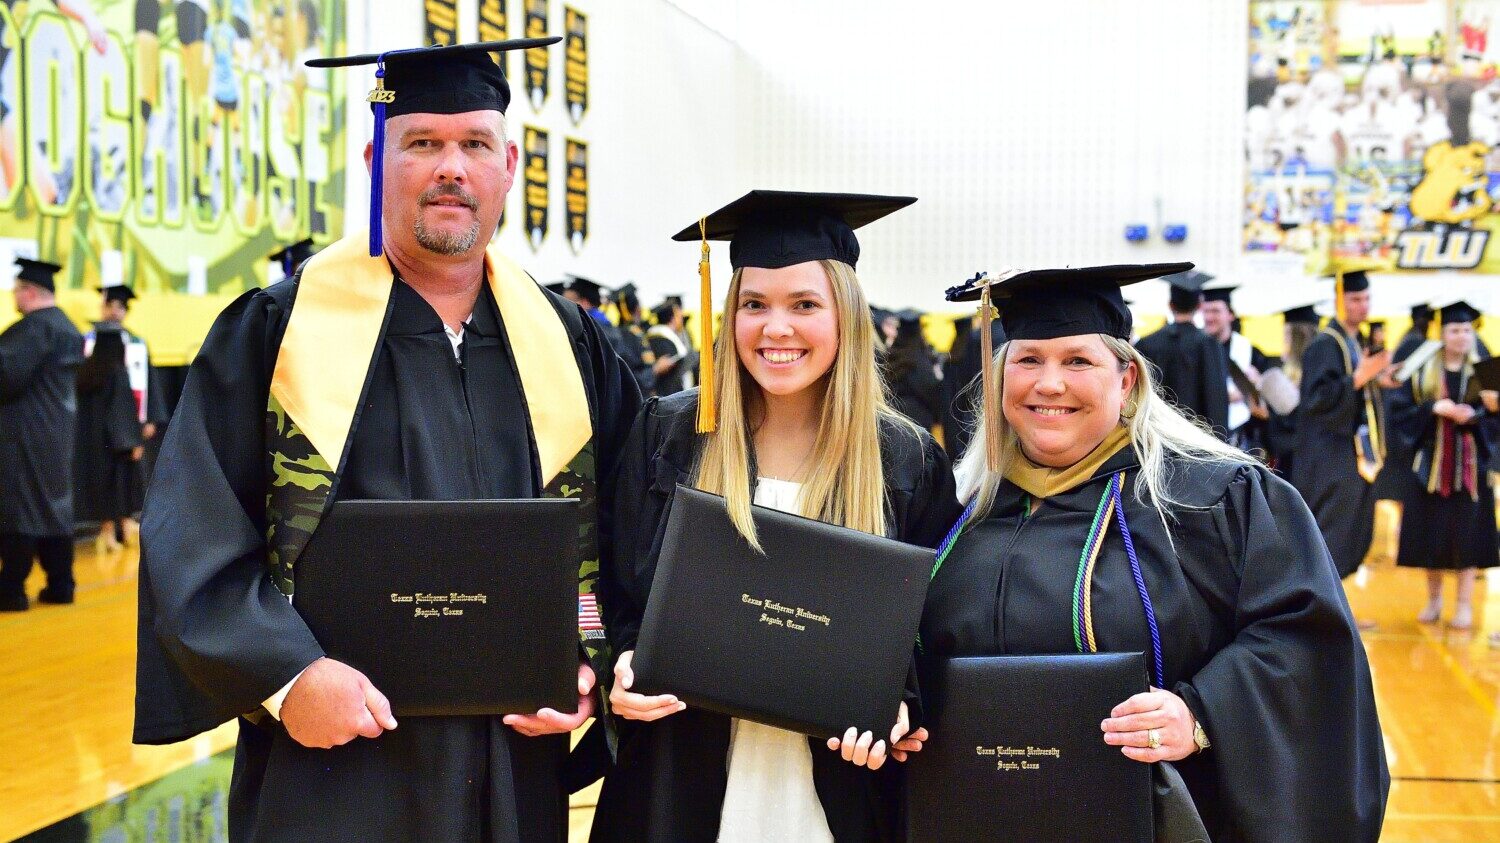 Adams family holds diplomas at graduation